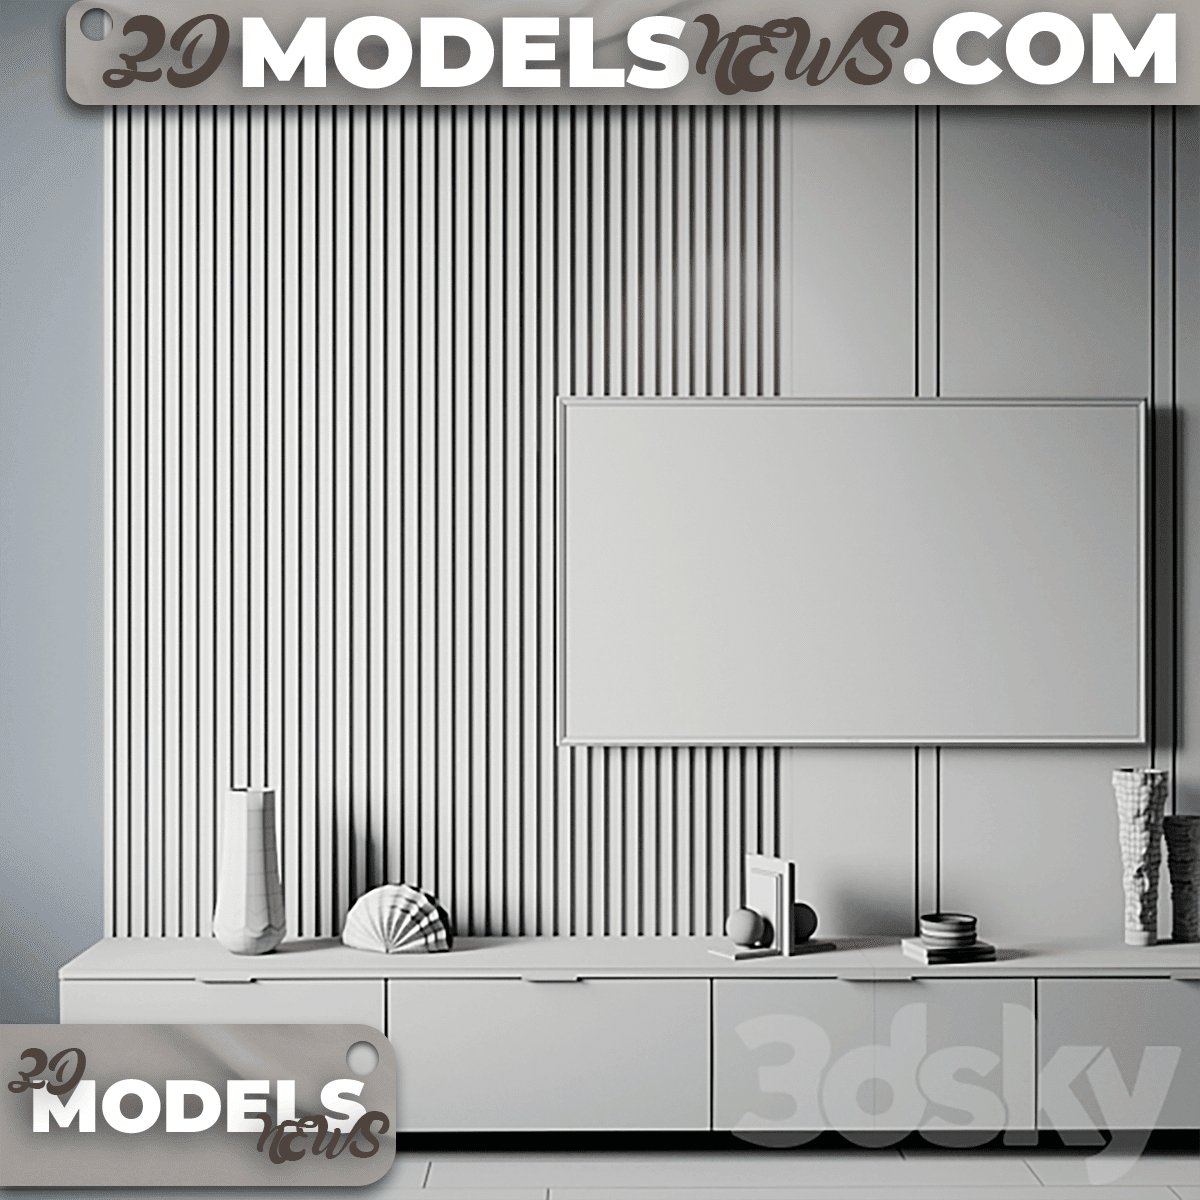 TV Wall Model set 191 4